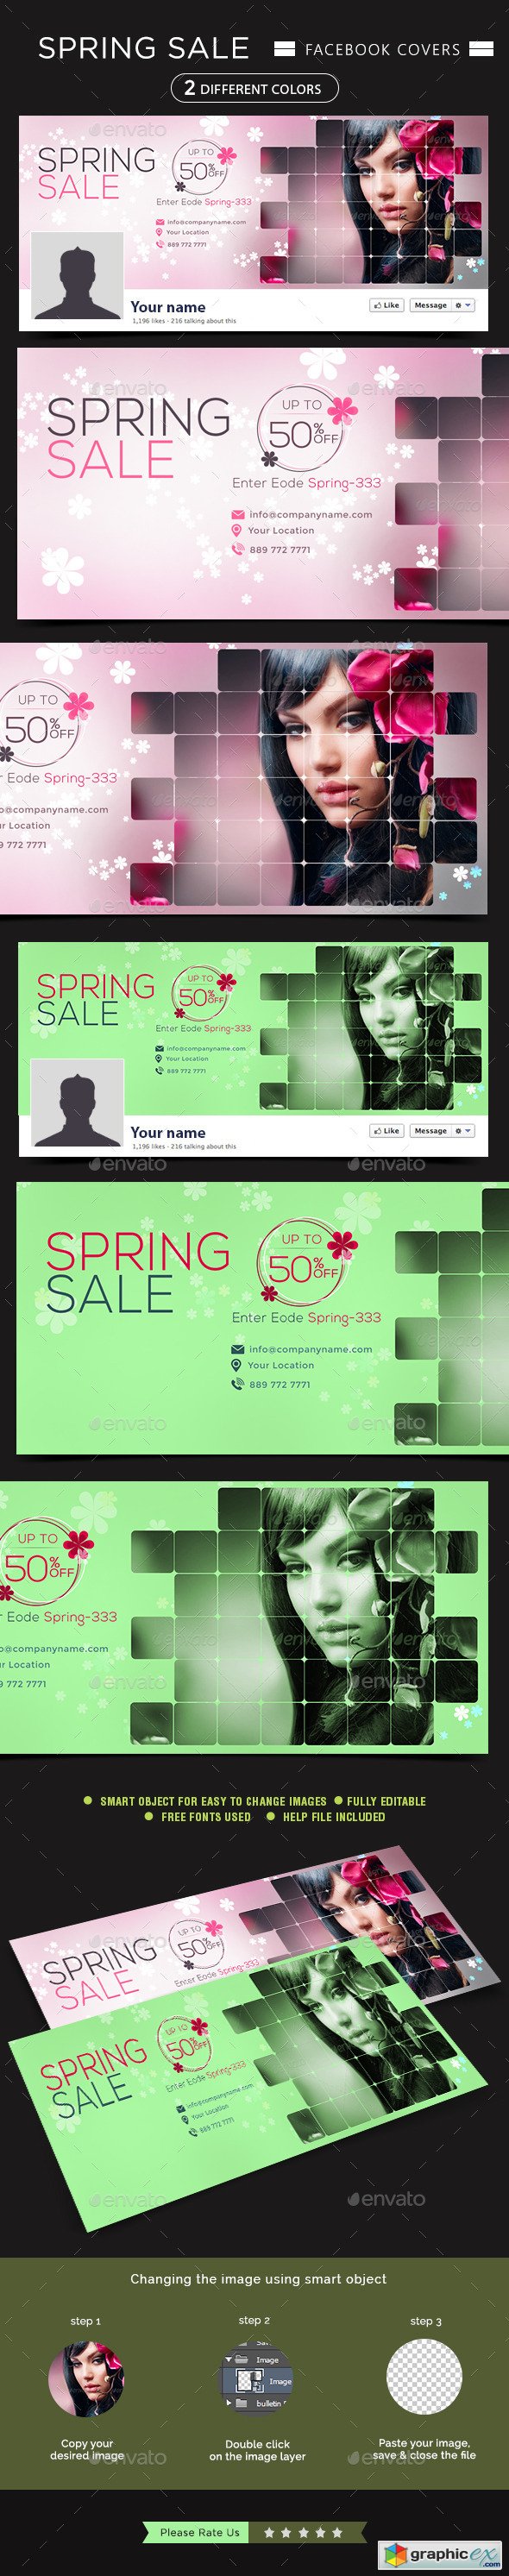 Spring Sale Facebook Cover